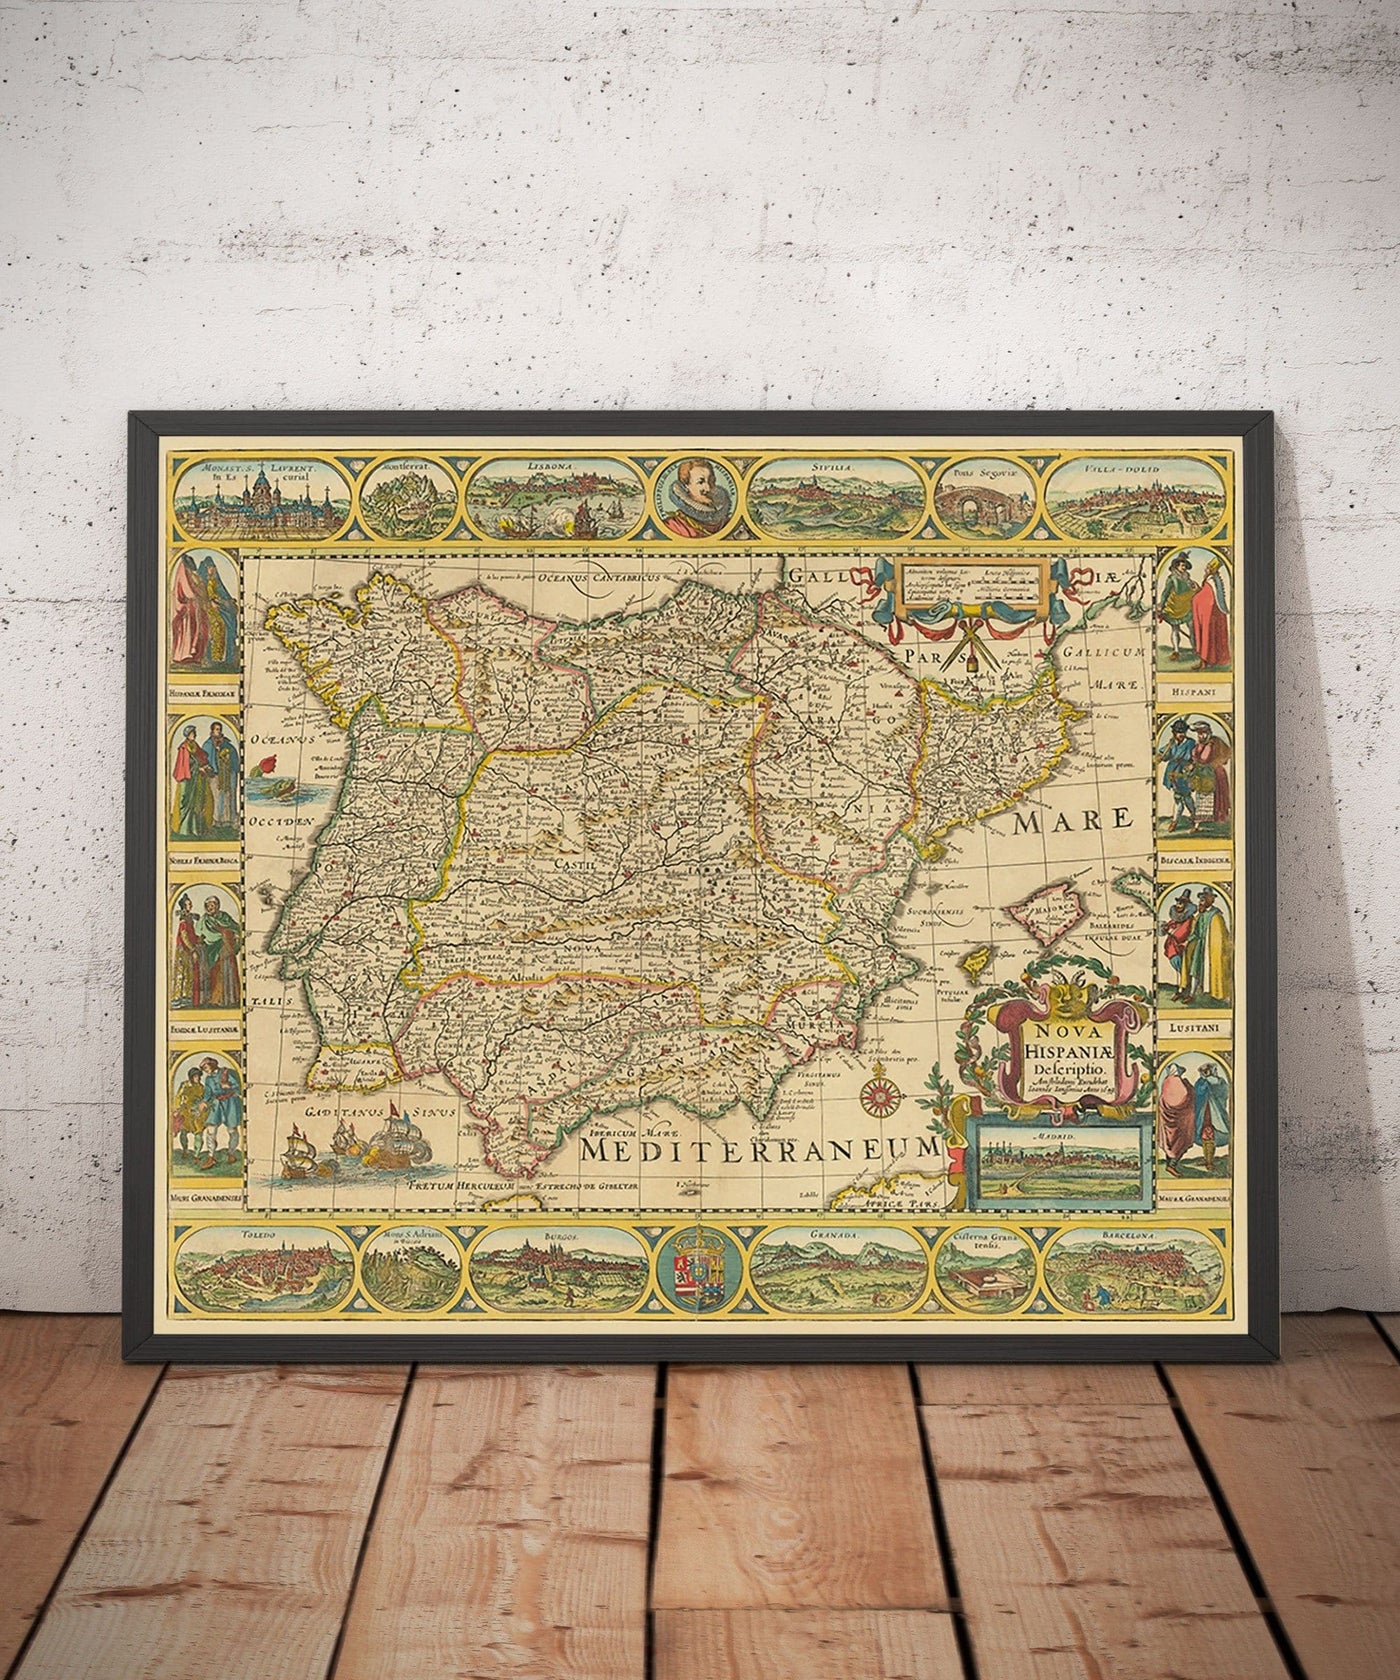 Old Map of Spain & Portugal, 1659 by Jan Jansson - Madrid, Lisbon, Barcelona, Catalonia, Valencia, Iberia, Mediterranean Sea